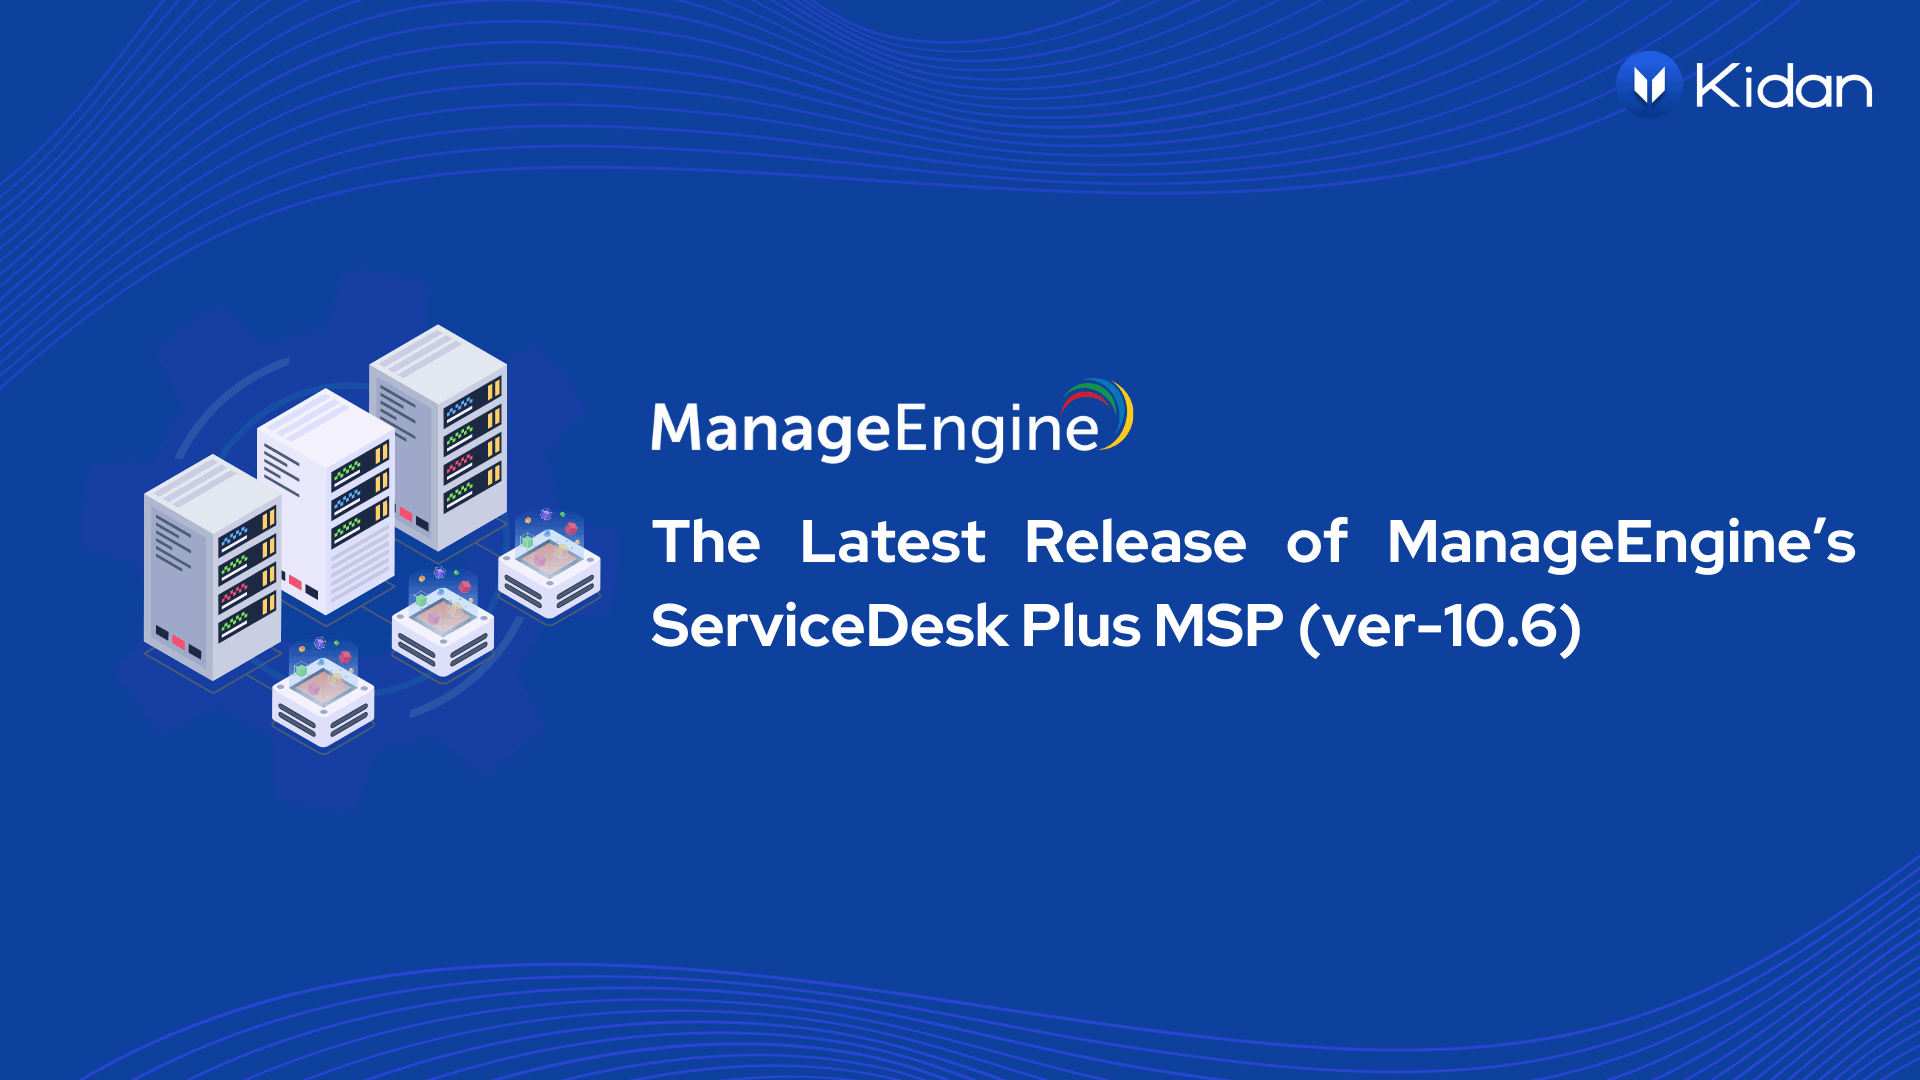 ServiceDesk Plus MSP Version 10.6